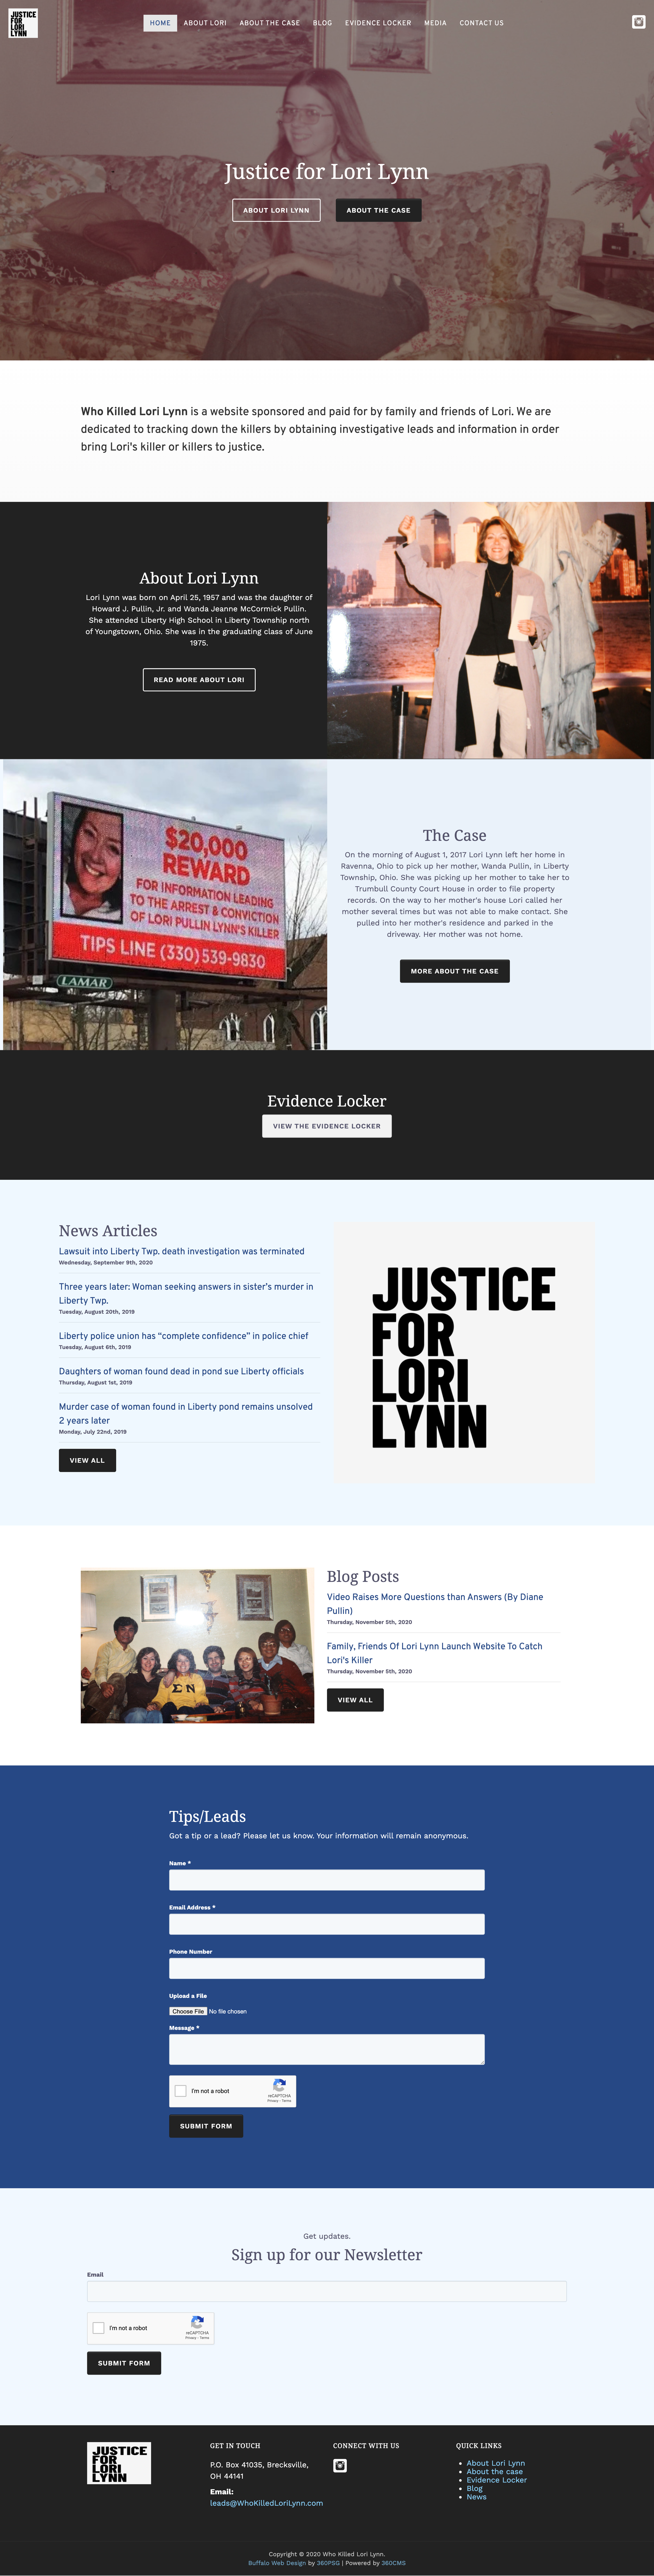 Justice for Lori Lynn Website - Desktop